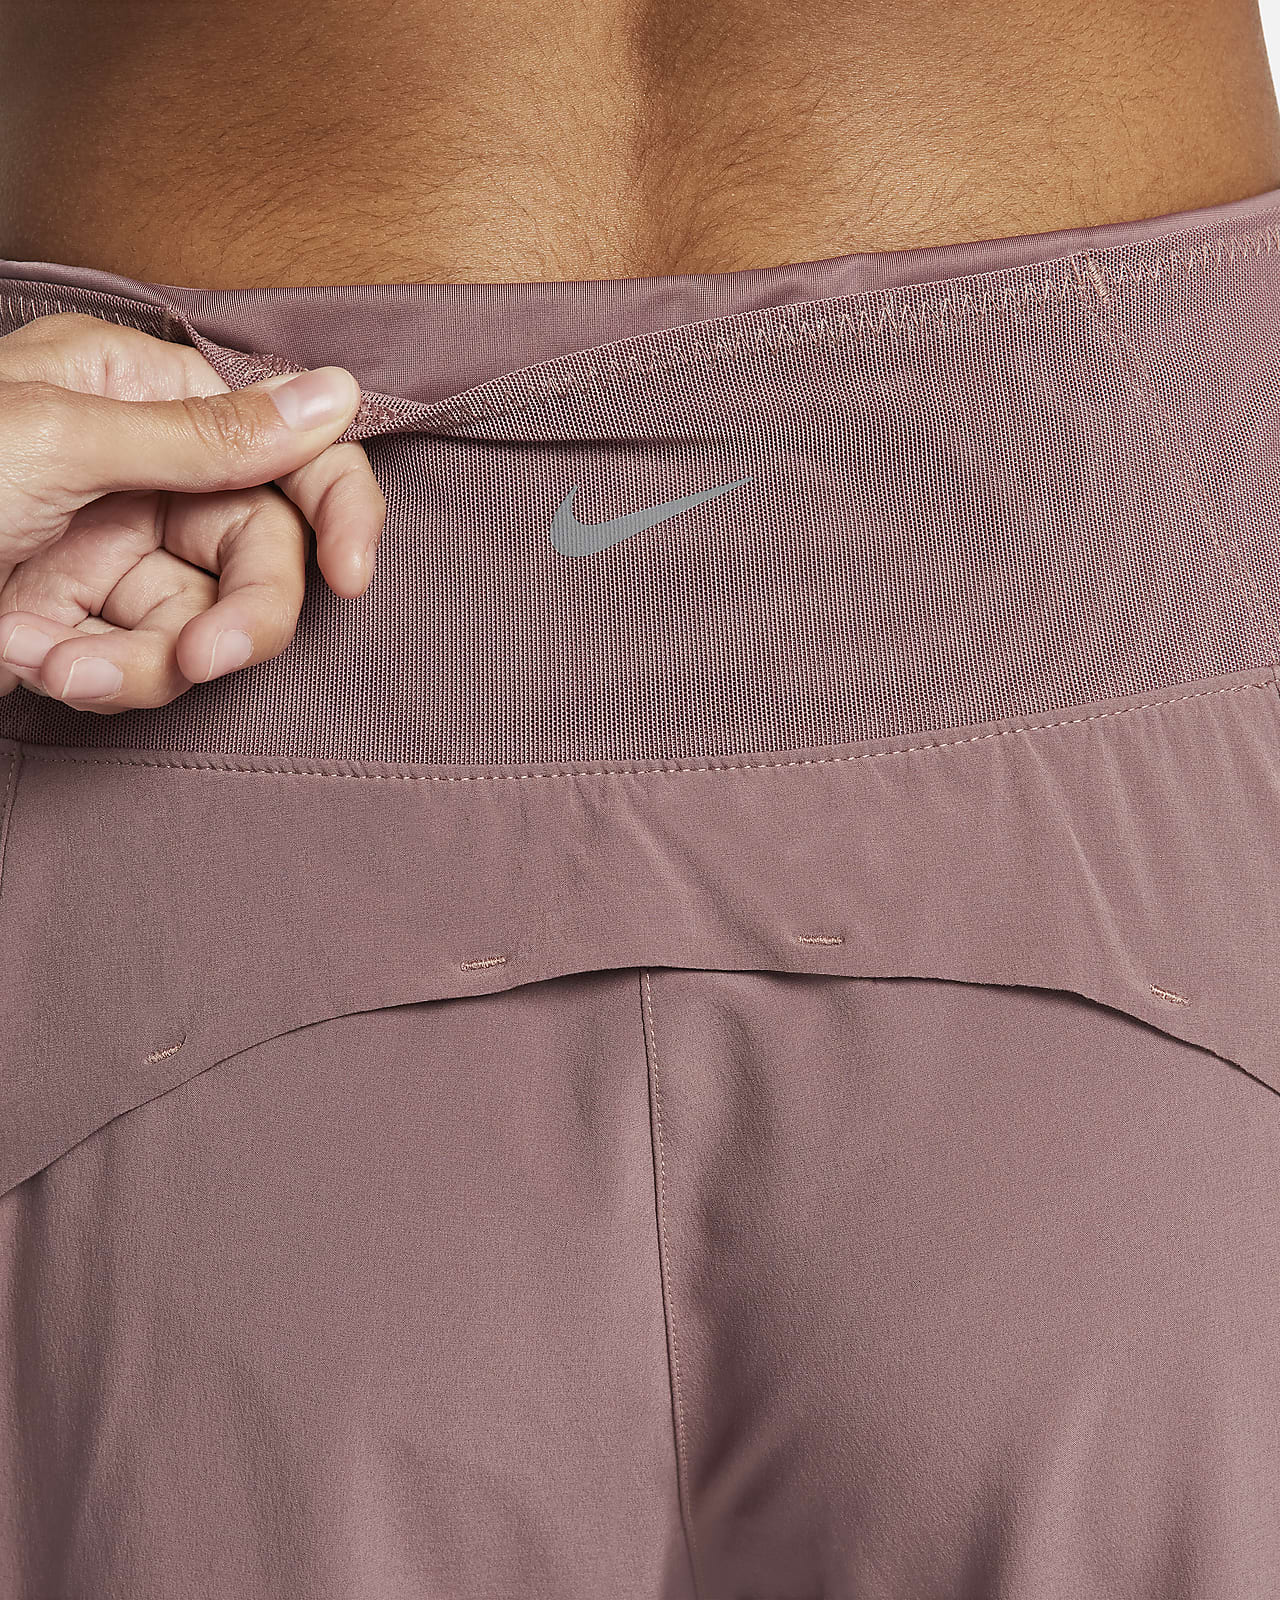 Used Nike Swift Run Pants